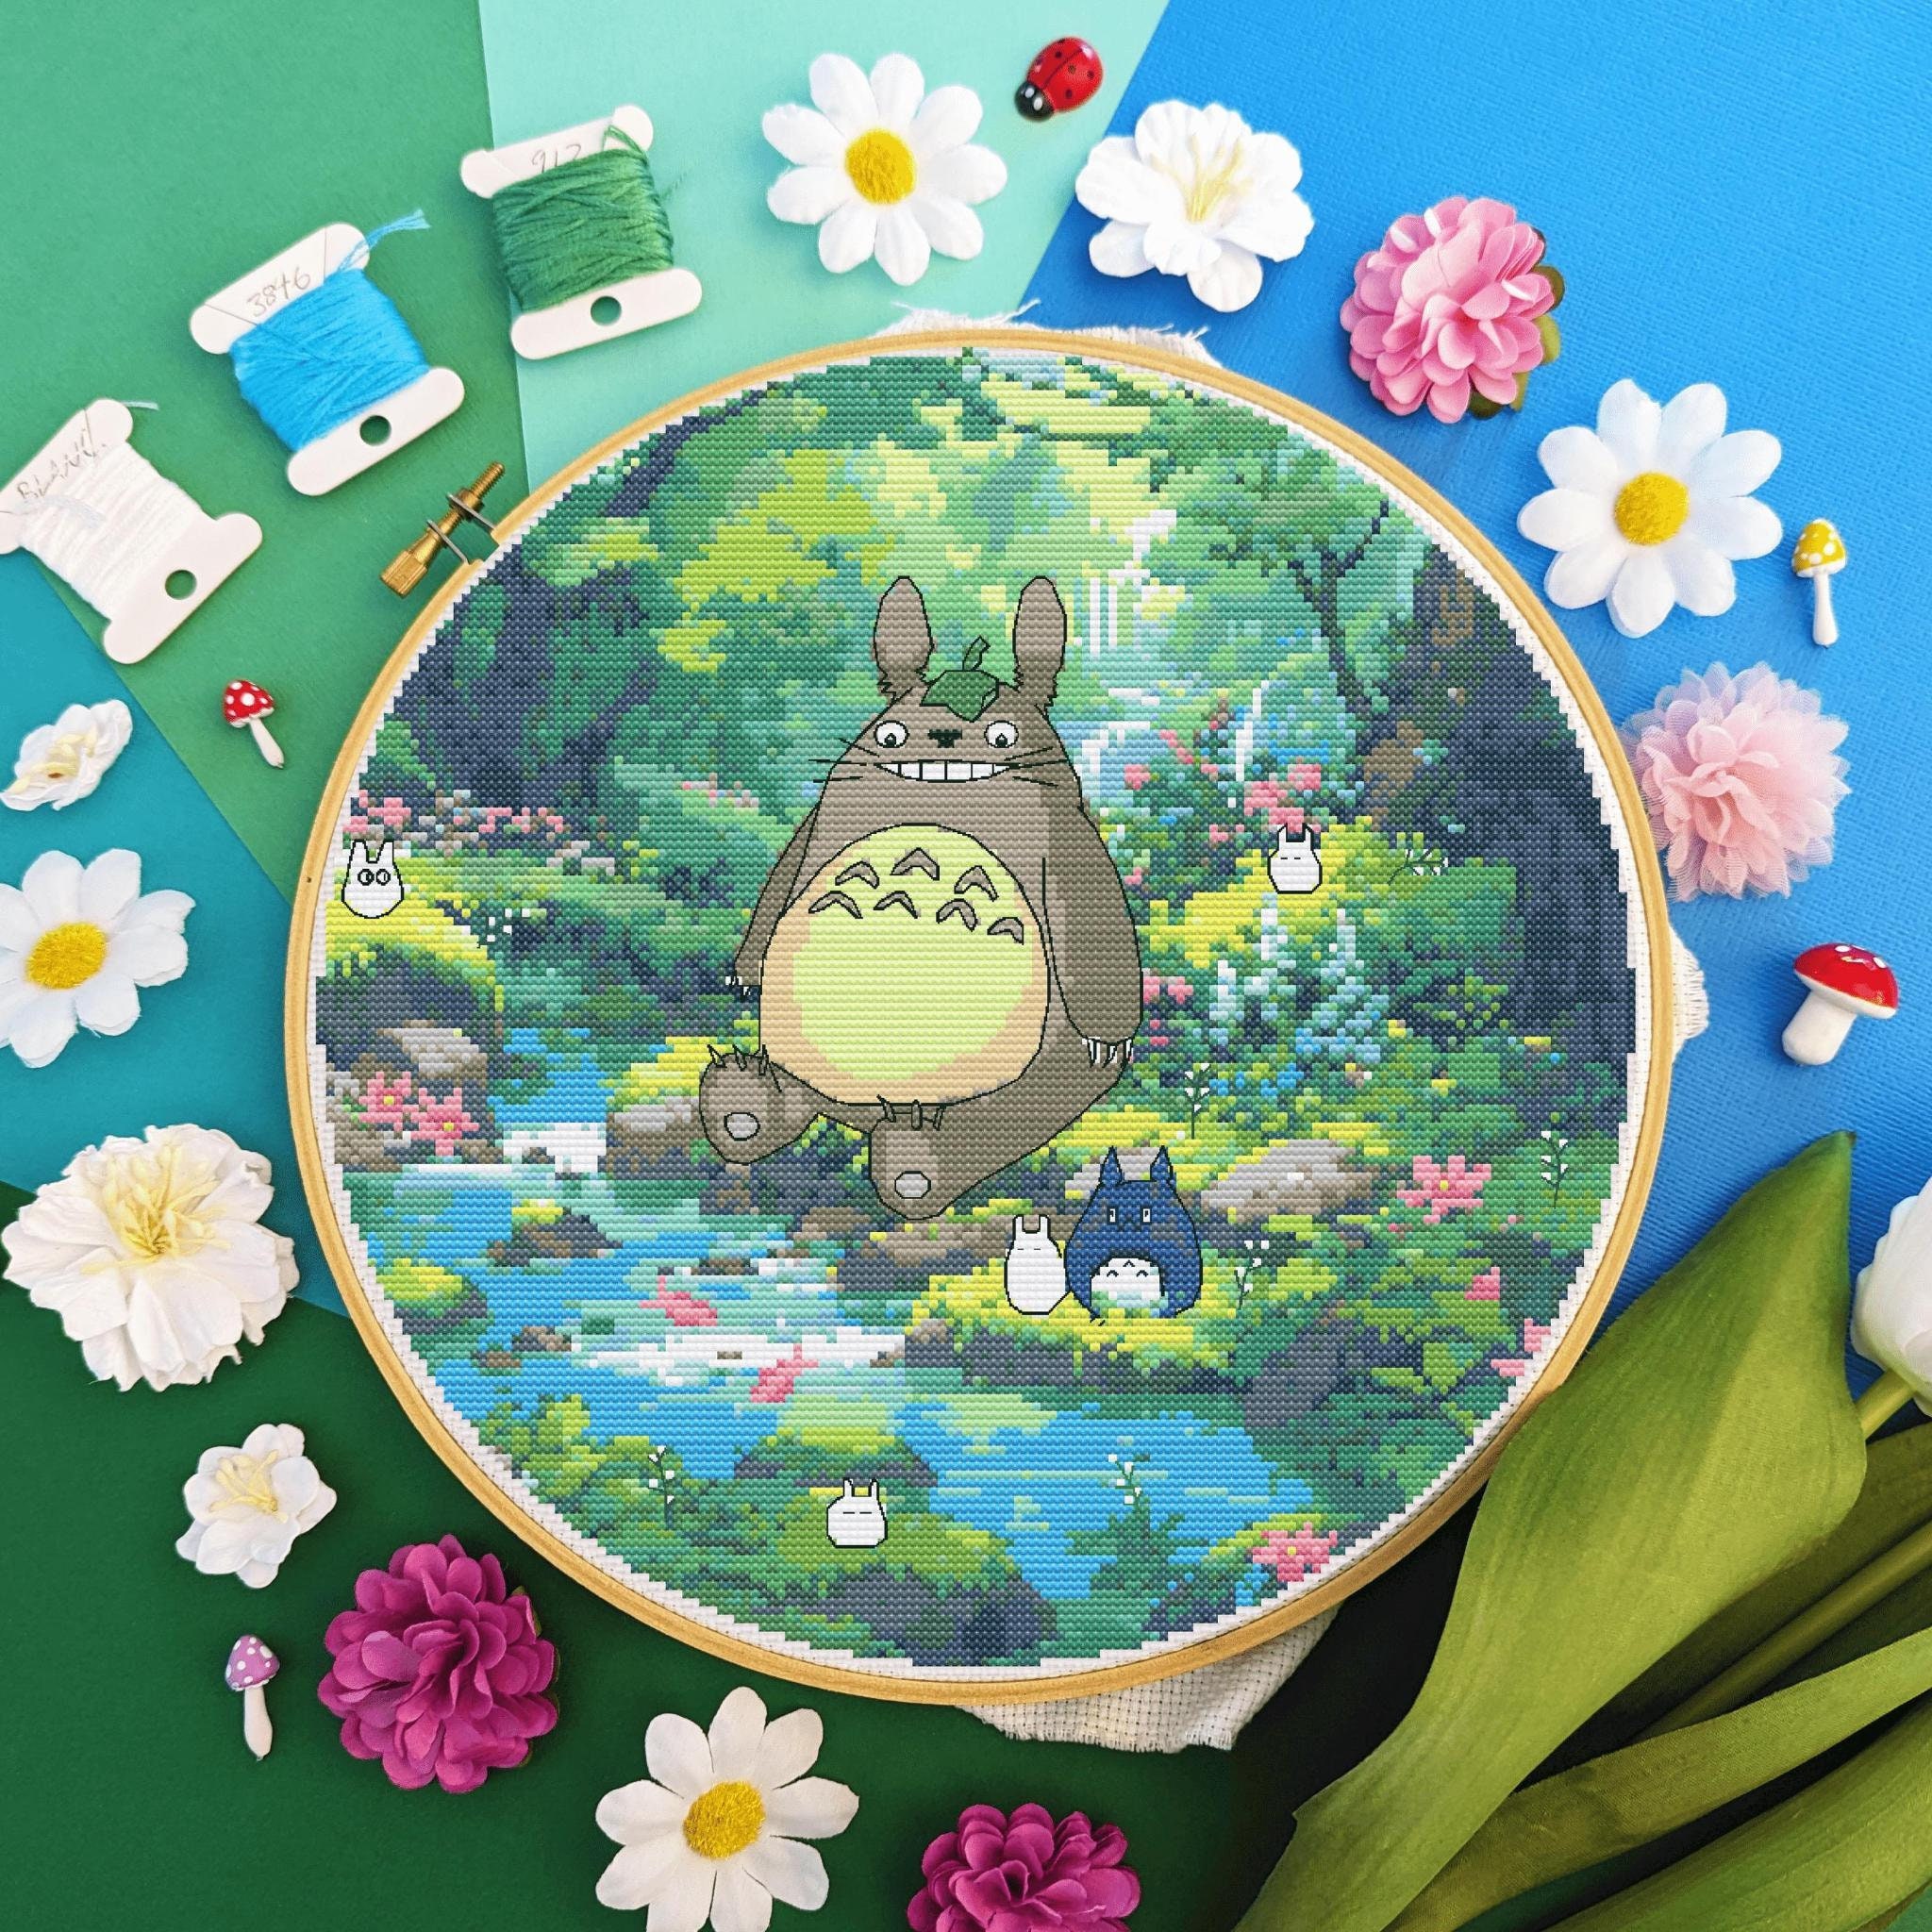 Totoro with Kids Embroidery Kit DIY Needlework Cartoon Needlecraft for  Beginner Cross Stitch Artcraft(With Hoop)